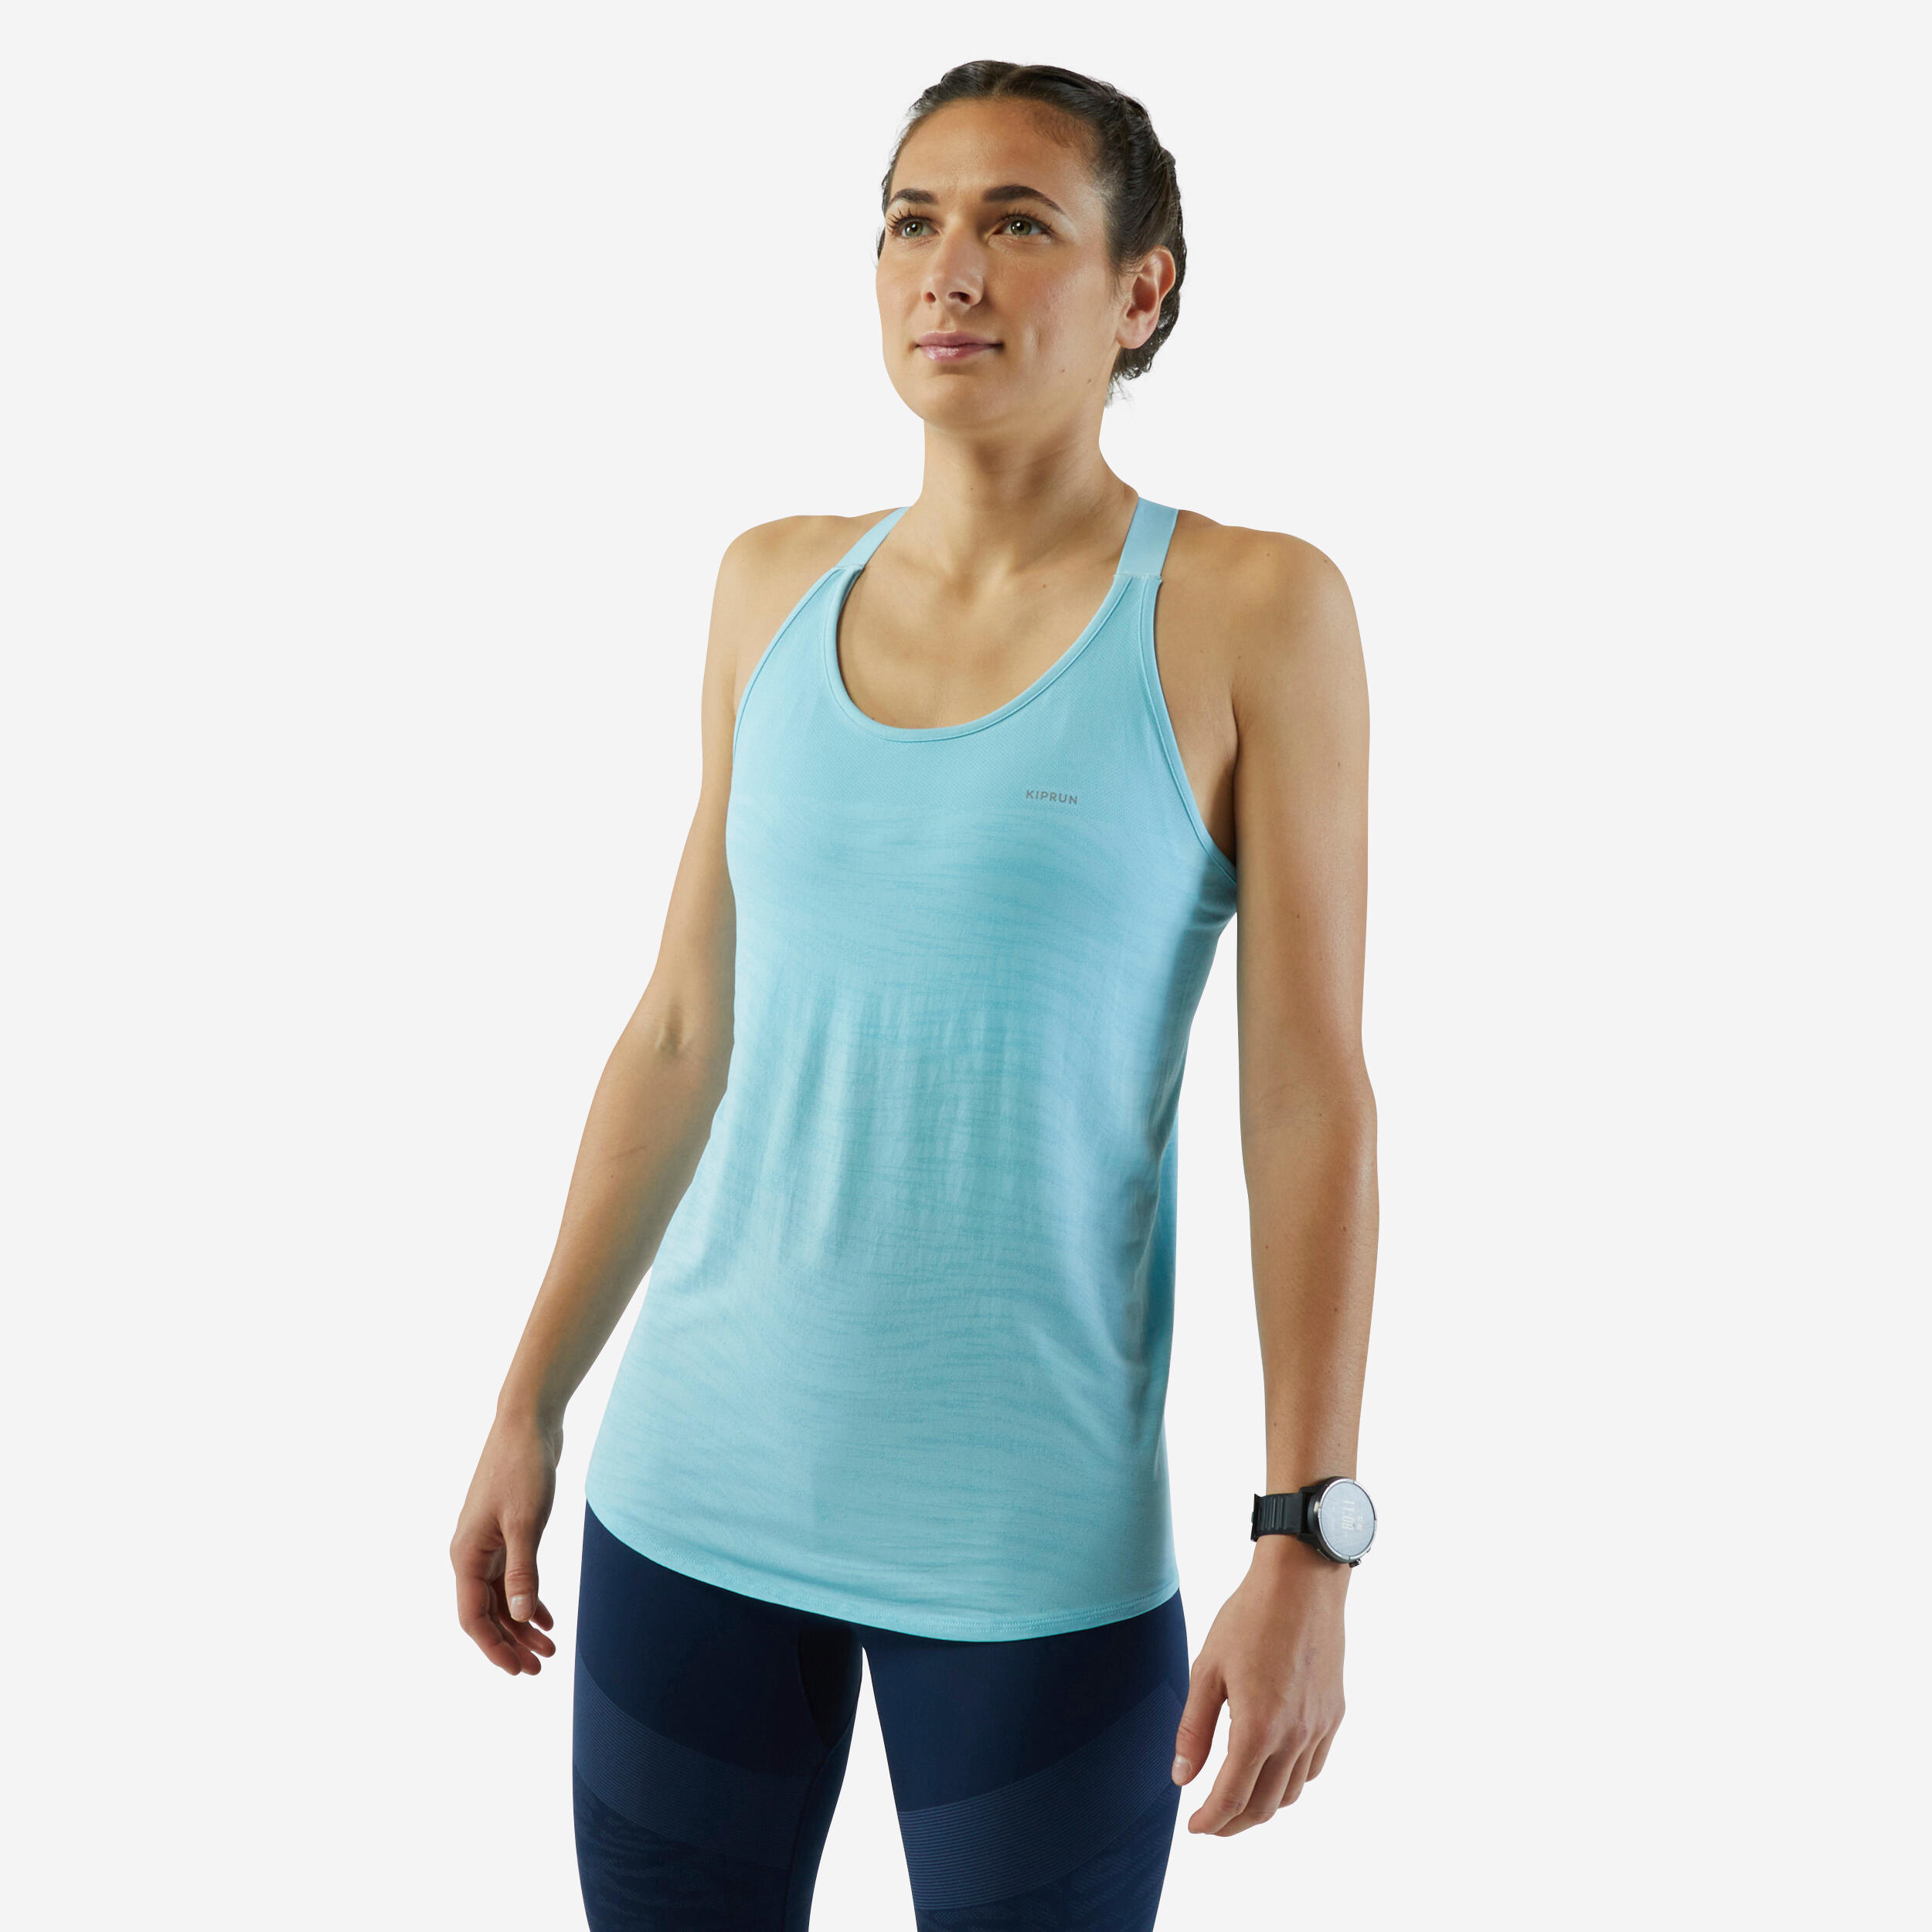 Nike women's Exercise workout tank top bra XS  Tank top bras, Tank tops,  Athletic tank tops